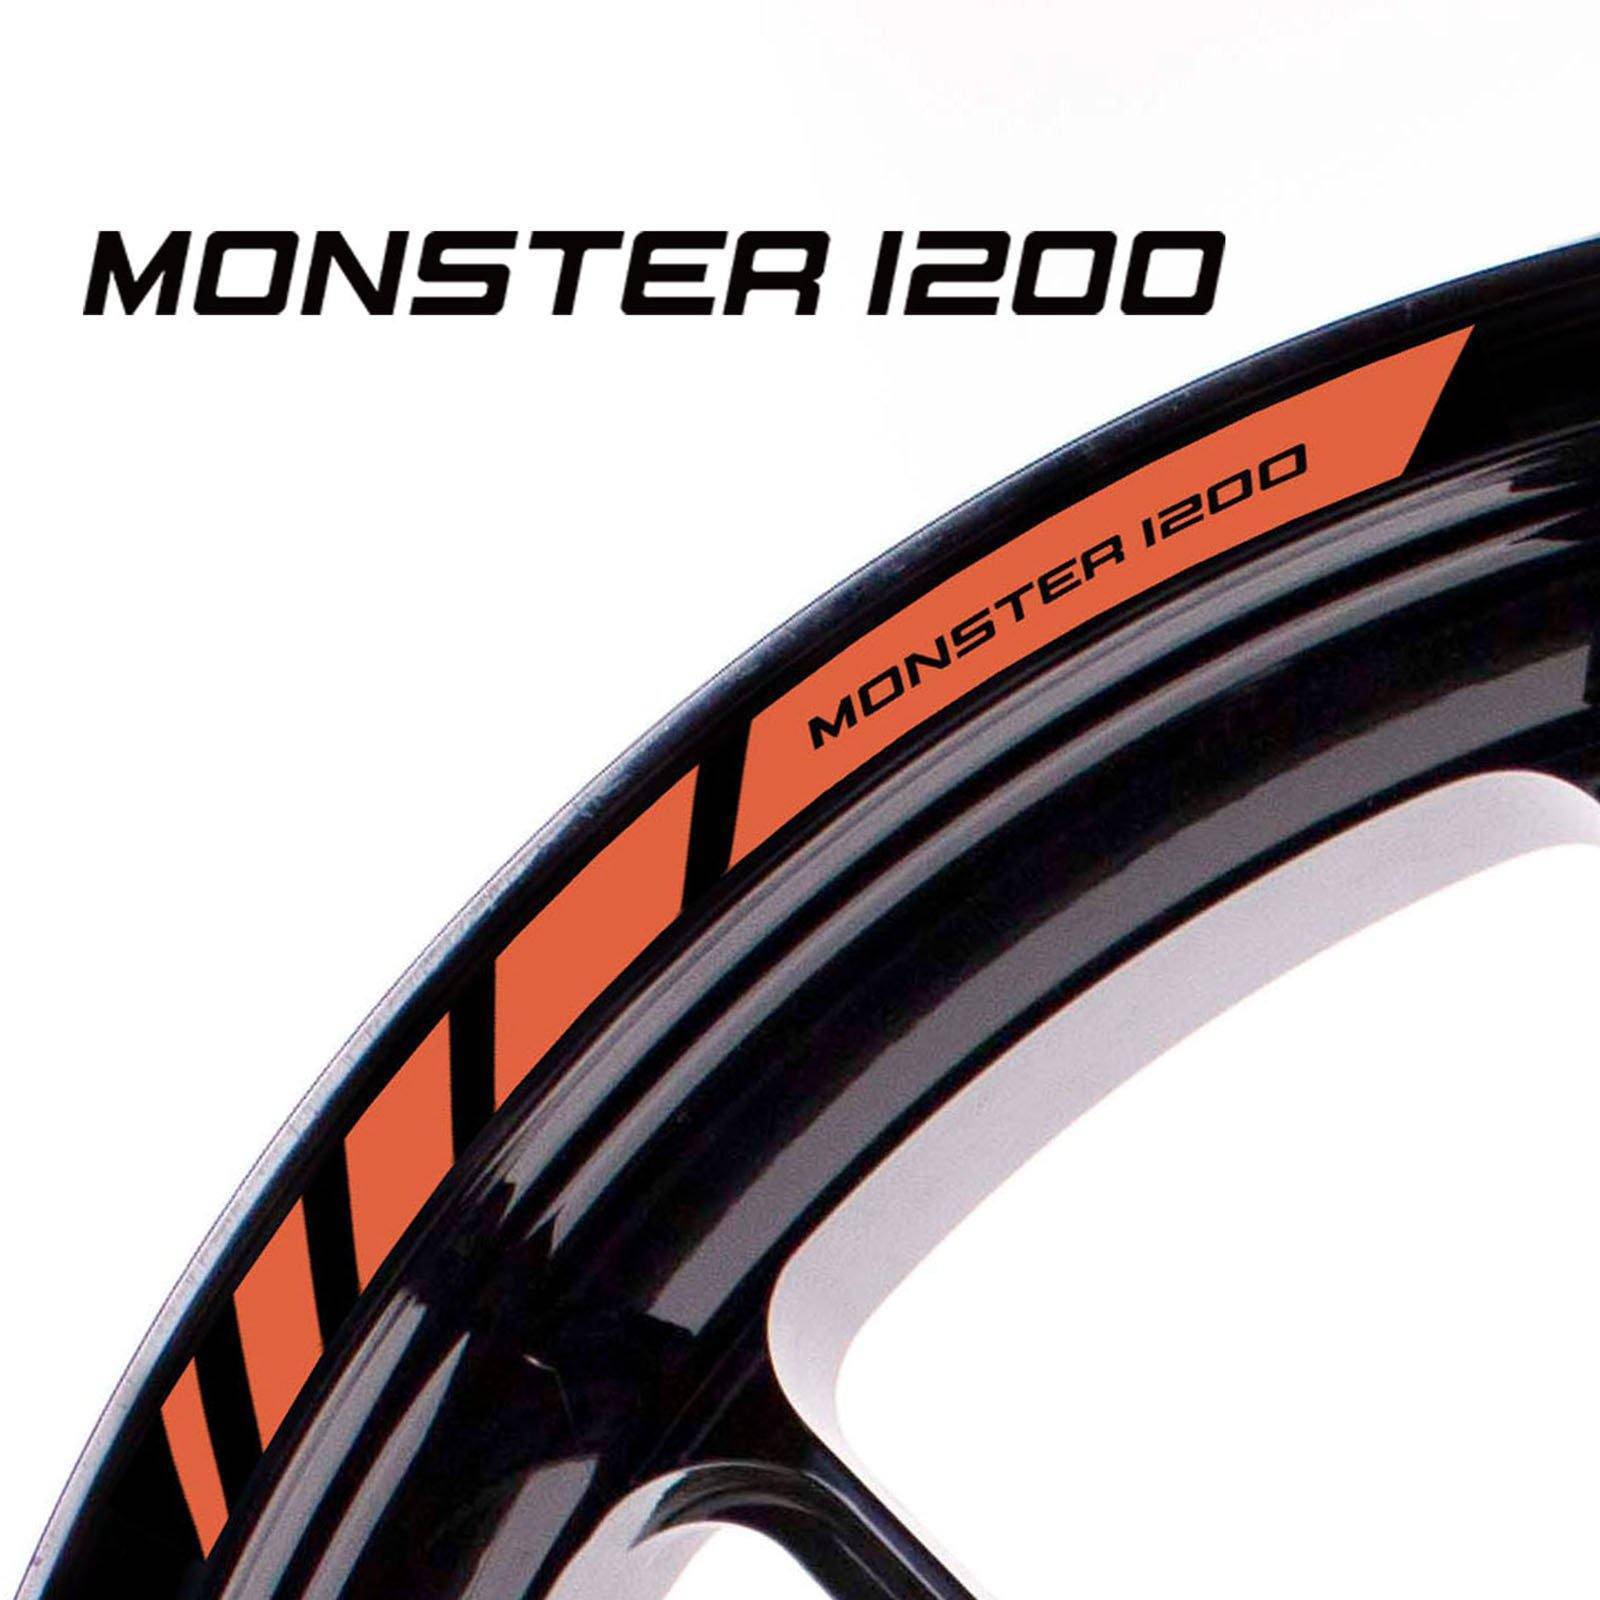 Ducati モンスター 1200 ロゴ 17 インチリムホイールステッカー MM01B